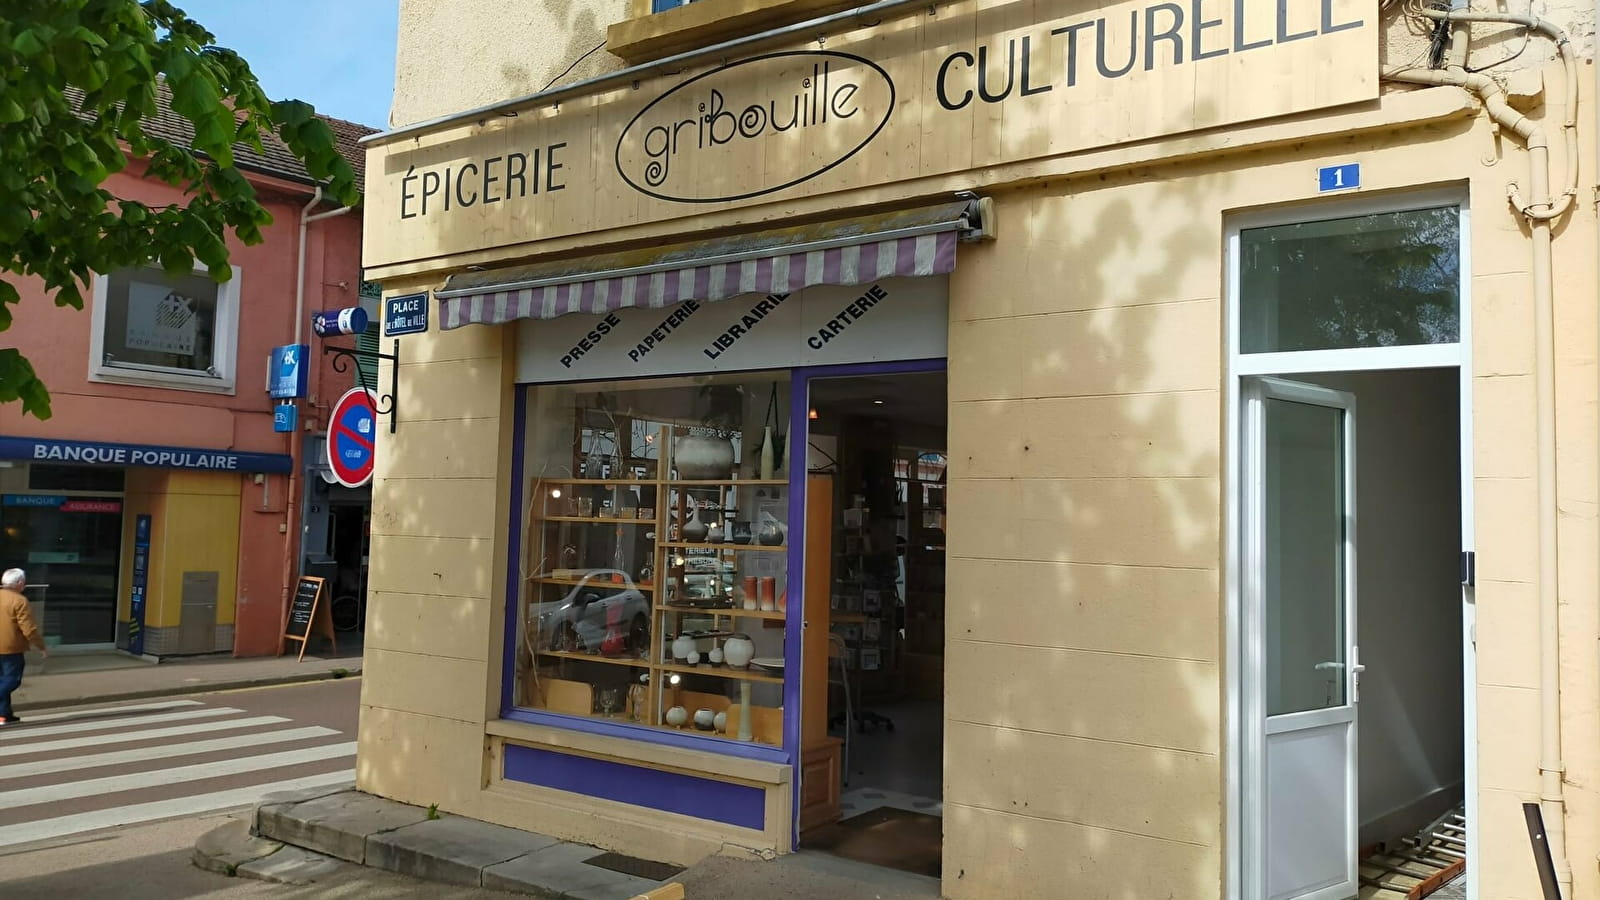 Gribouille - Epicerie Culturelle